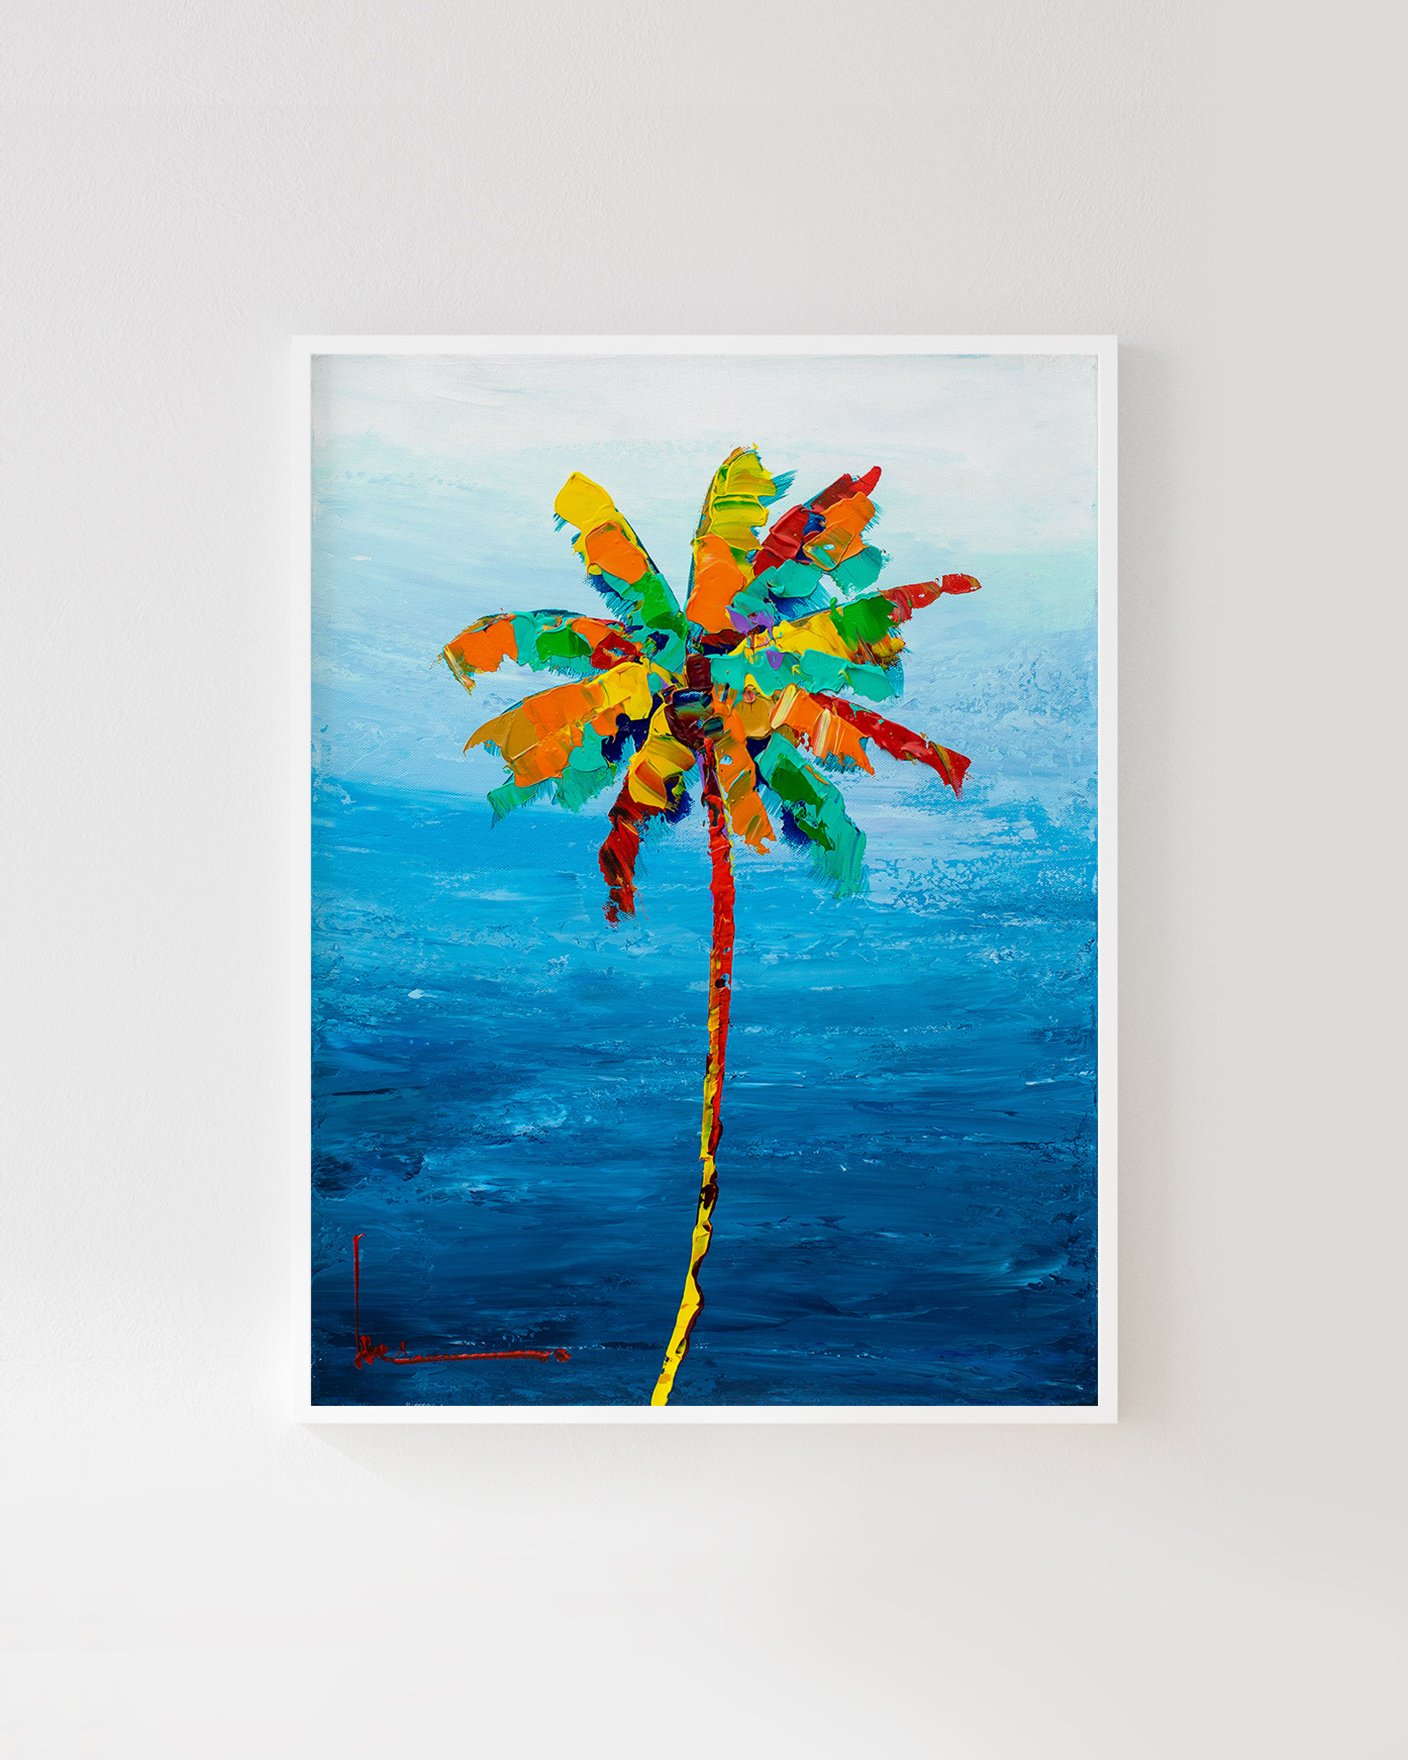 Catch a Wave is a 18x24 Original Acrylic Painting on Canvas — Leon F Ruiz